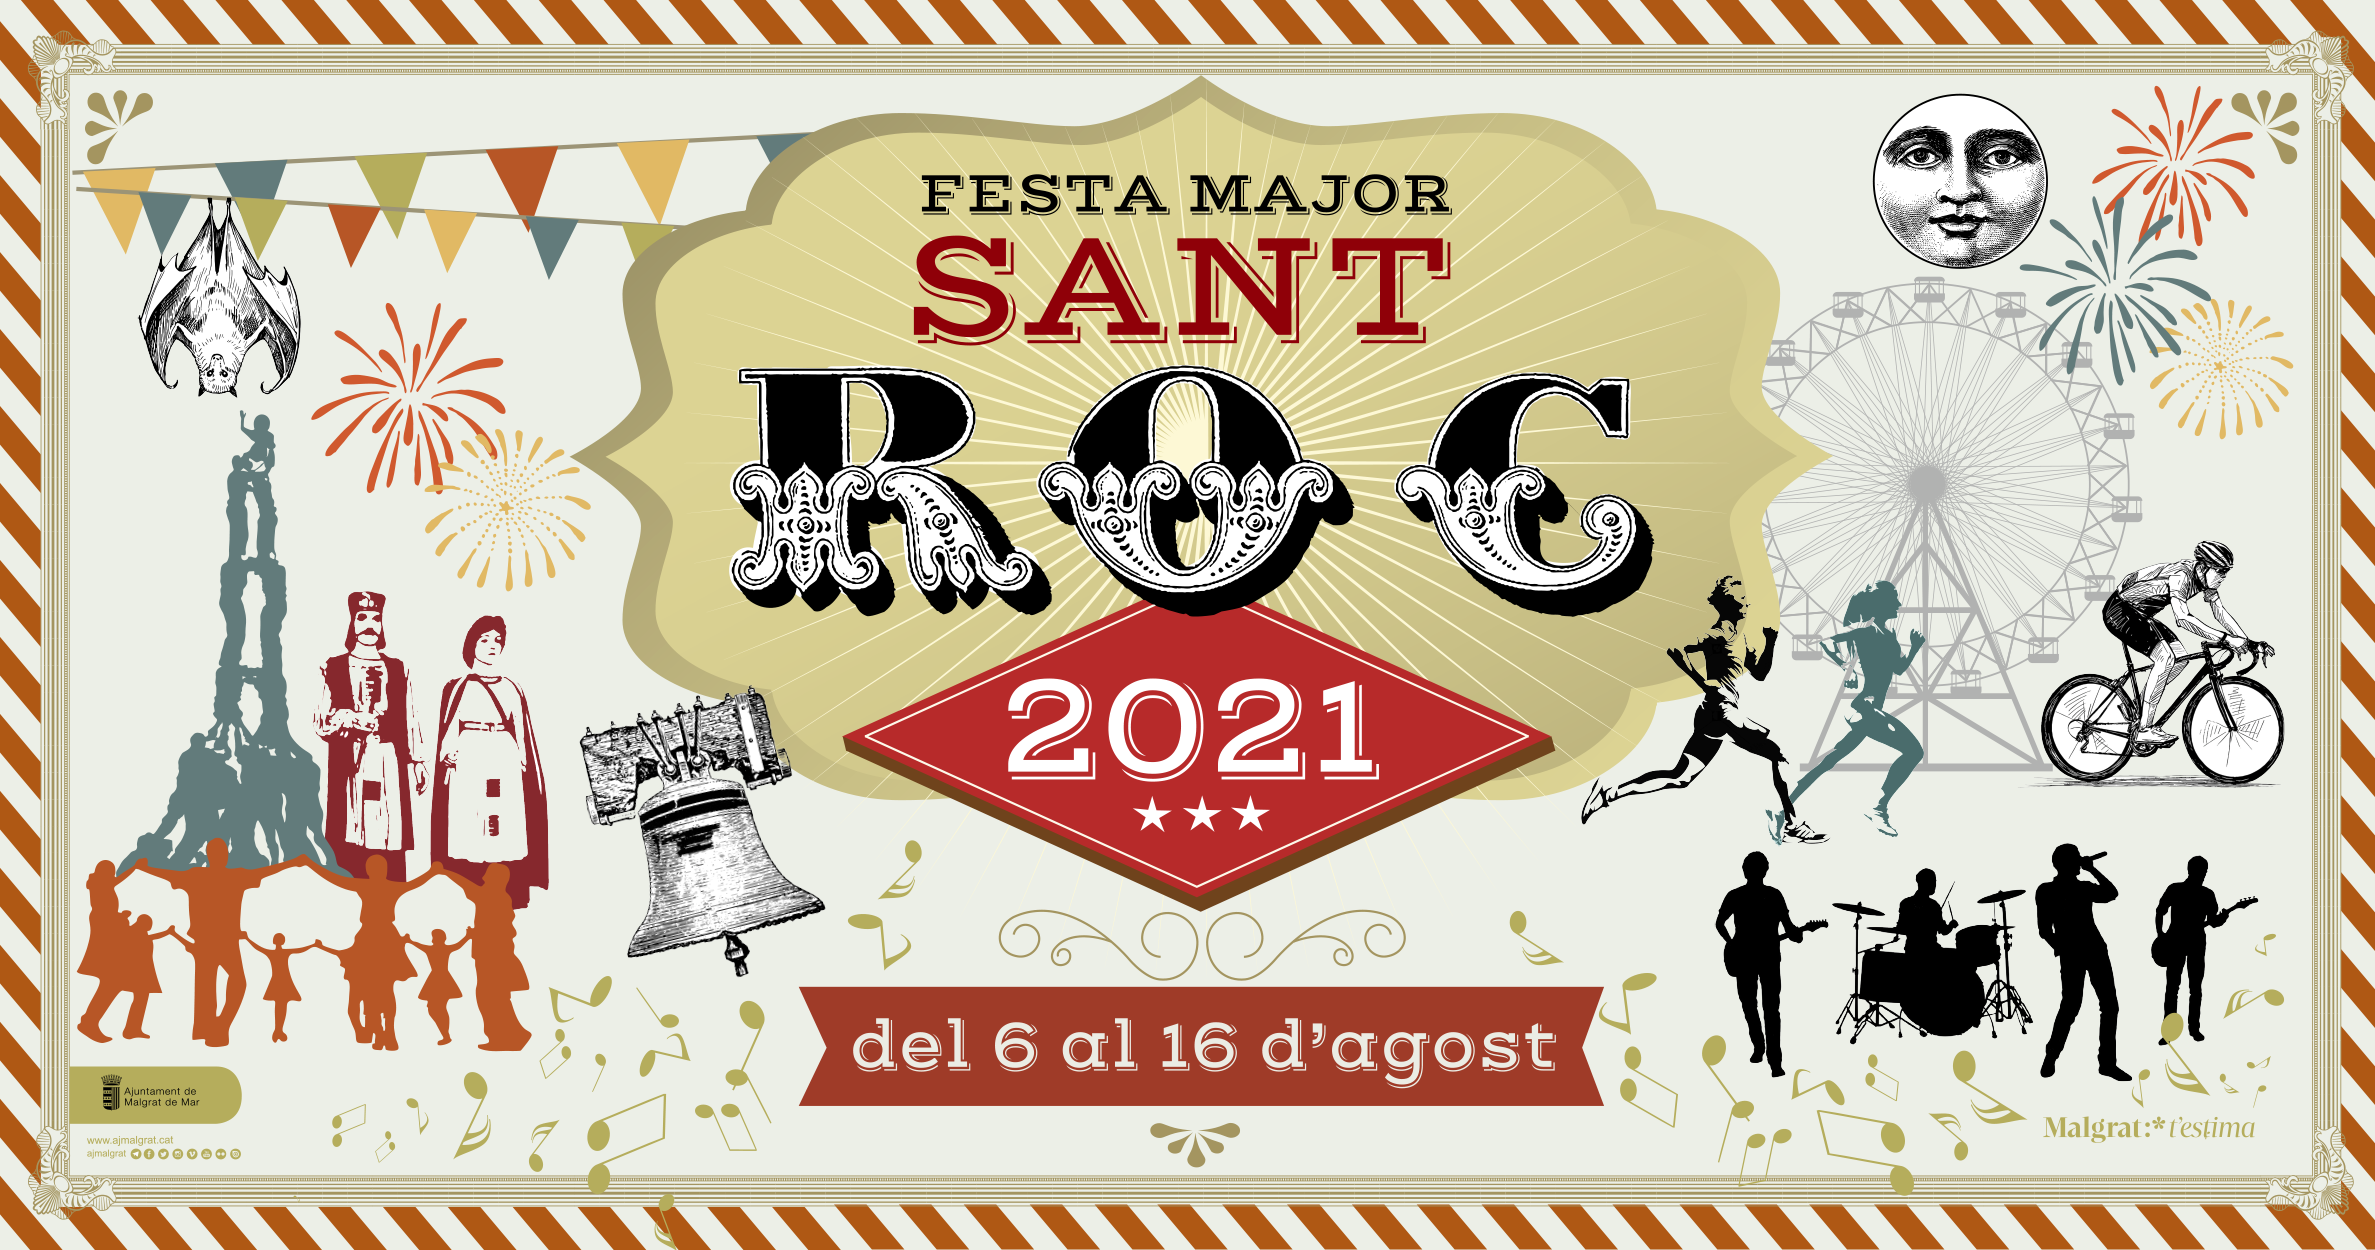 Festa Major de Sant Roc 2021.